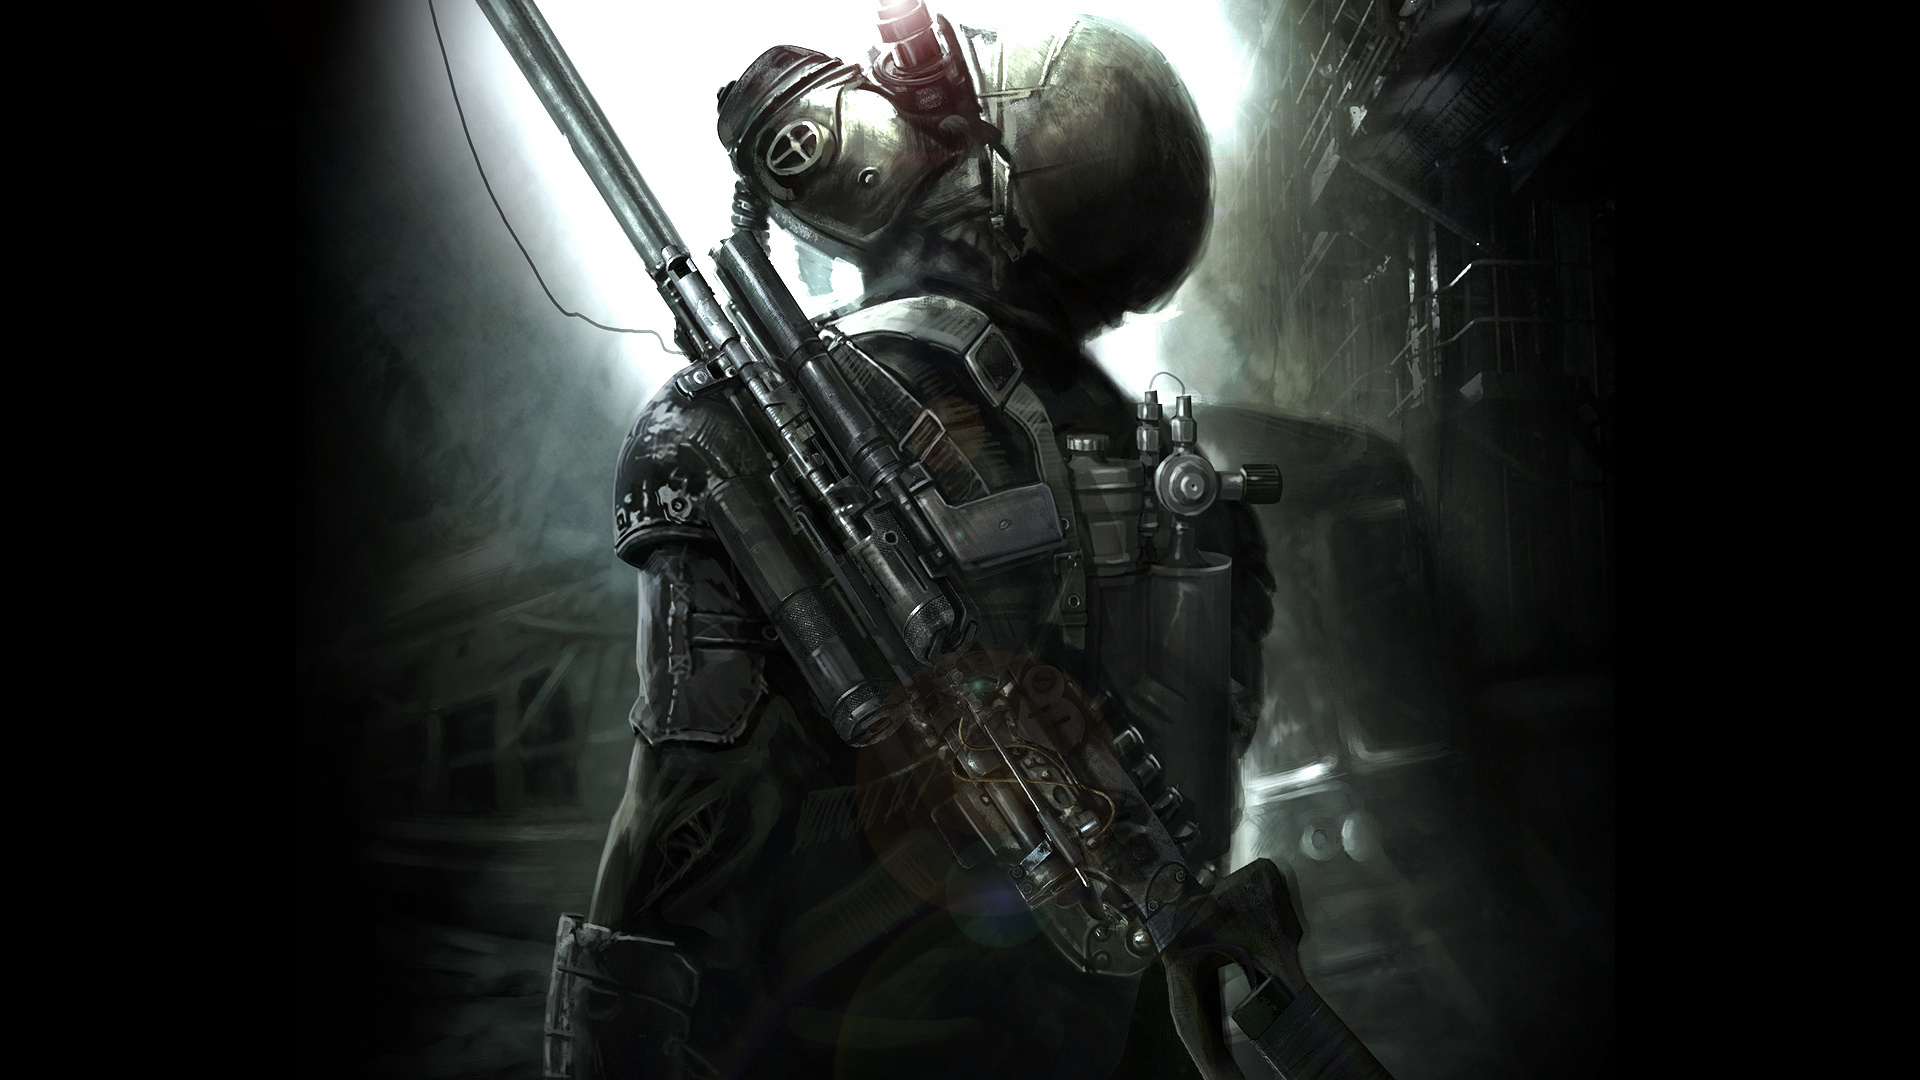 metro 2033 wallpaper,action adventure game,pc game,darkness,cg artwork,screenshot